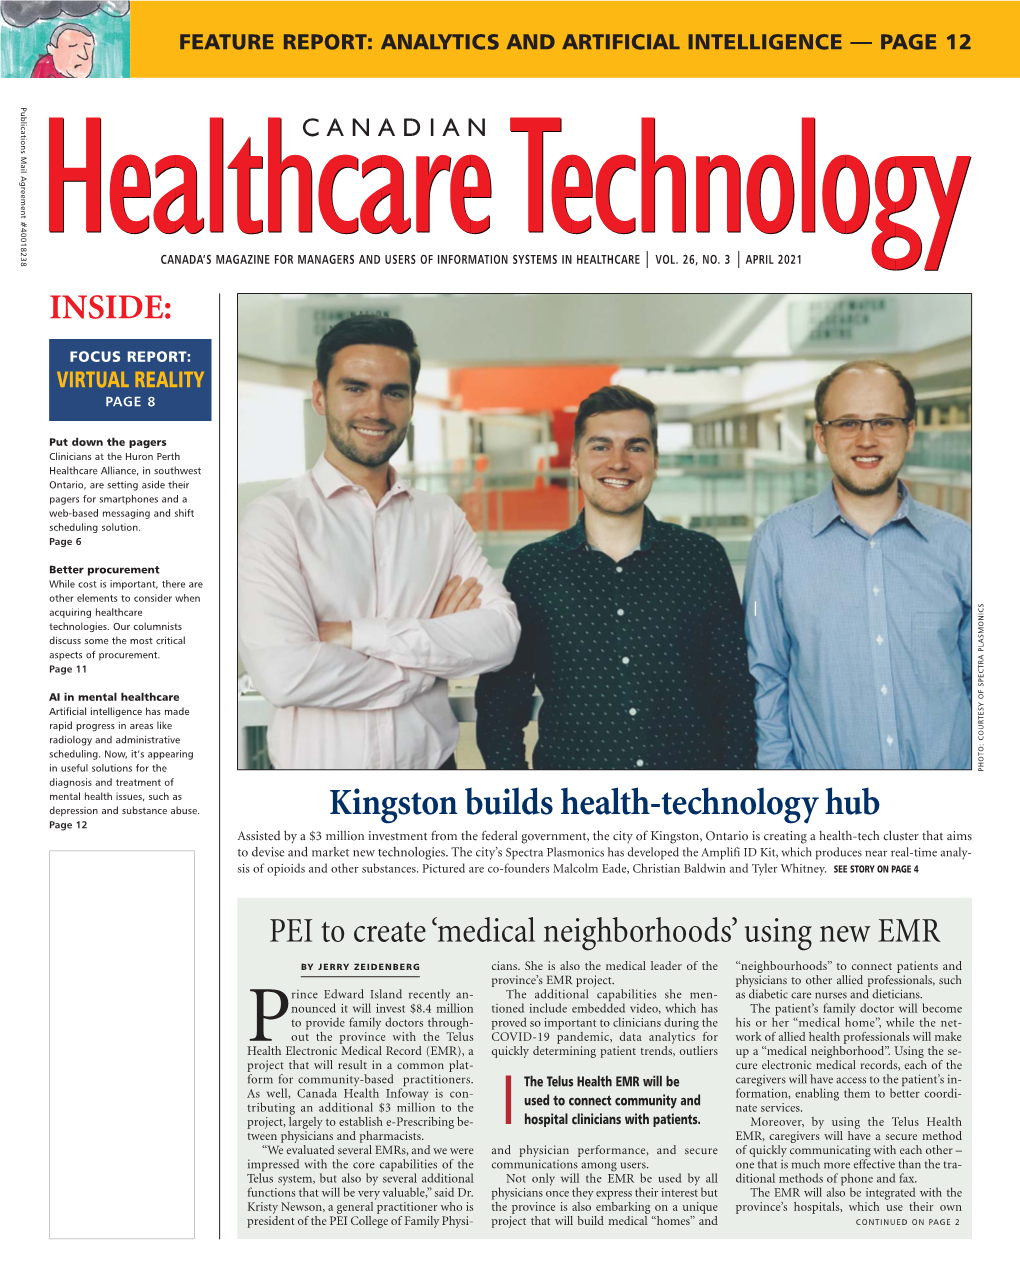 Kingston Builds Health-Technology